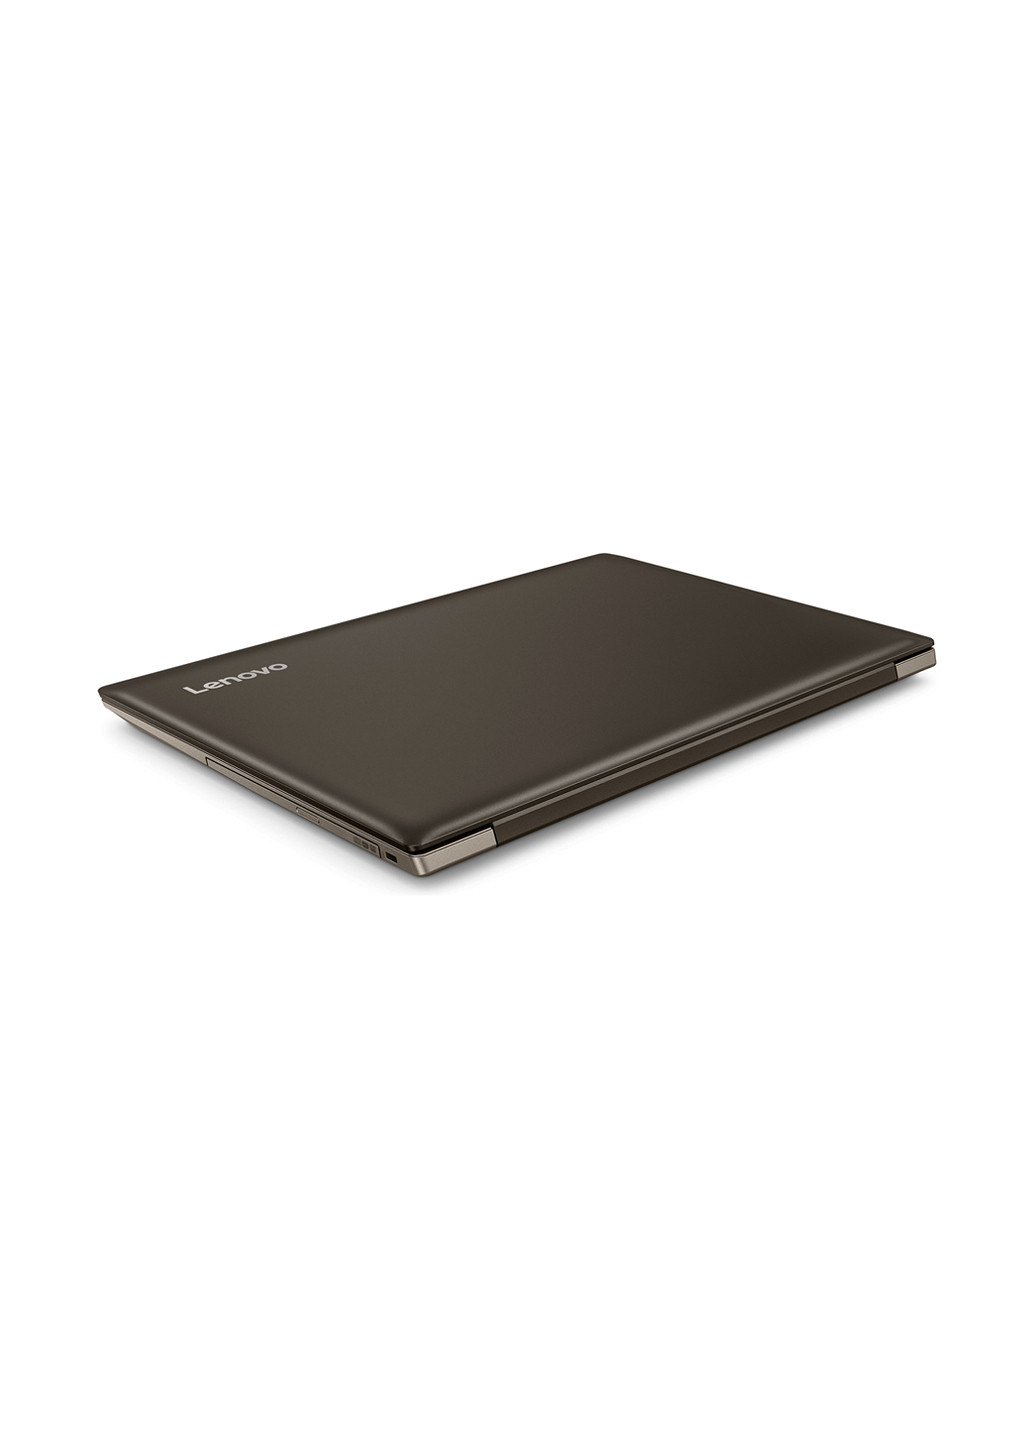 Ноутбук Lenovo ideapad 330-15ikbr (81de01vura) chocolate (133461898)